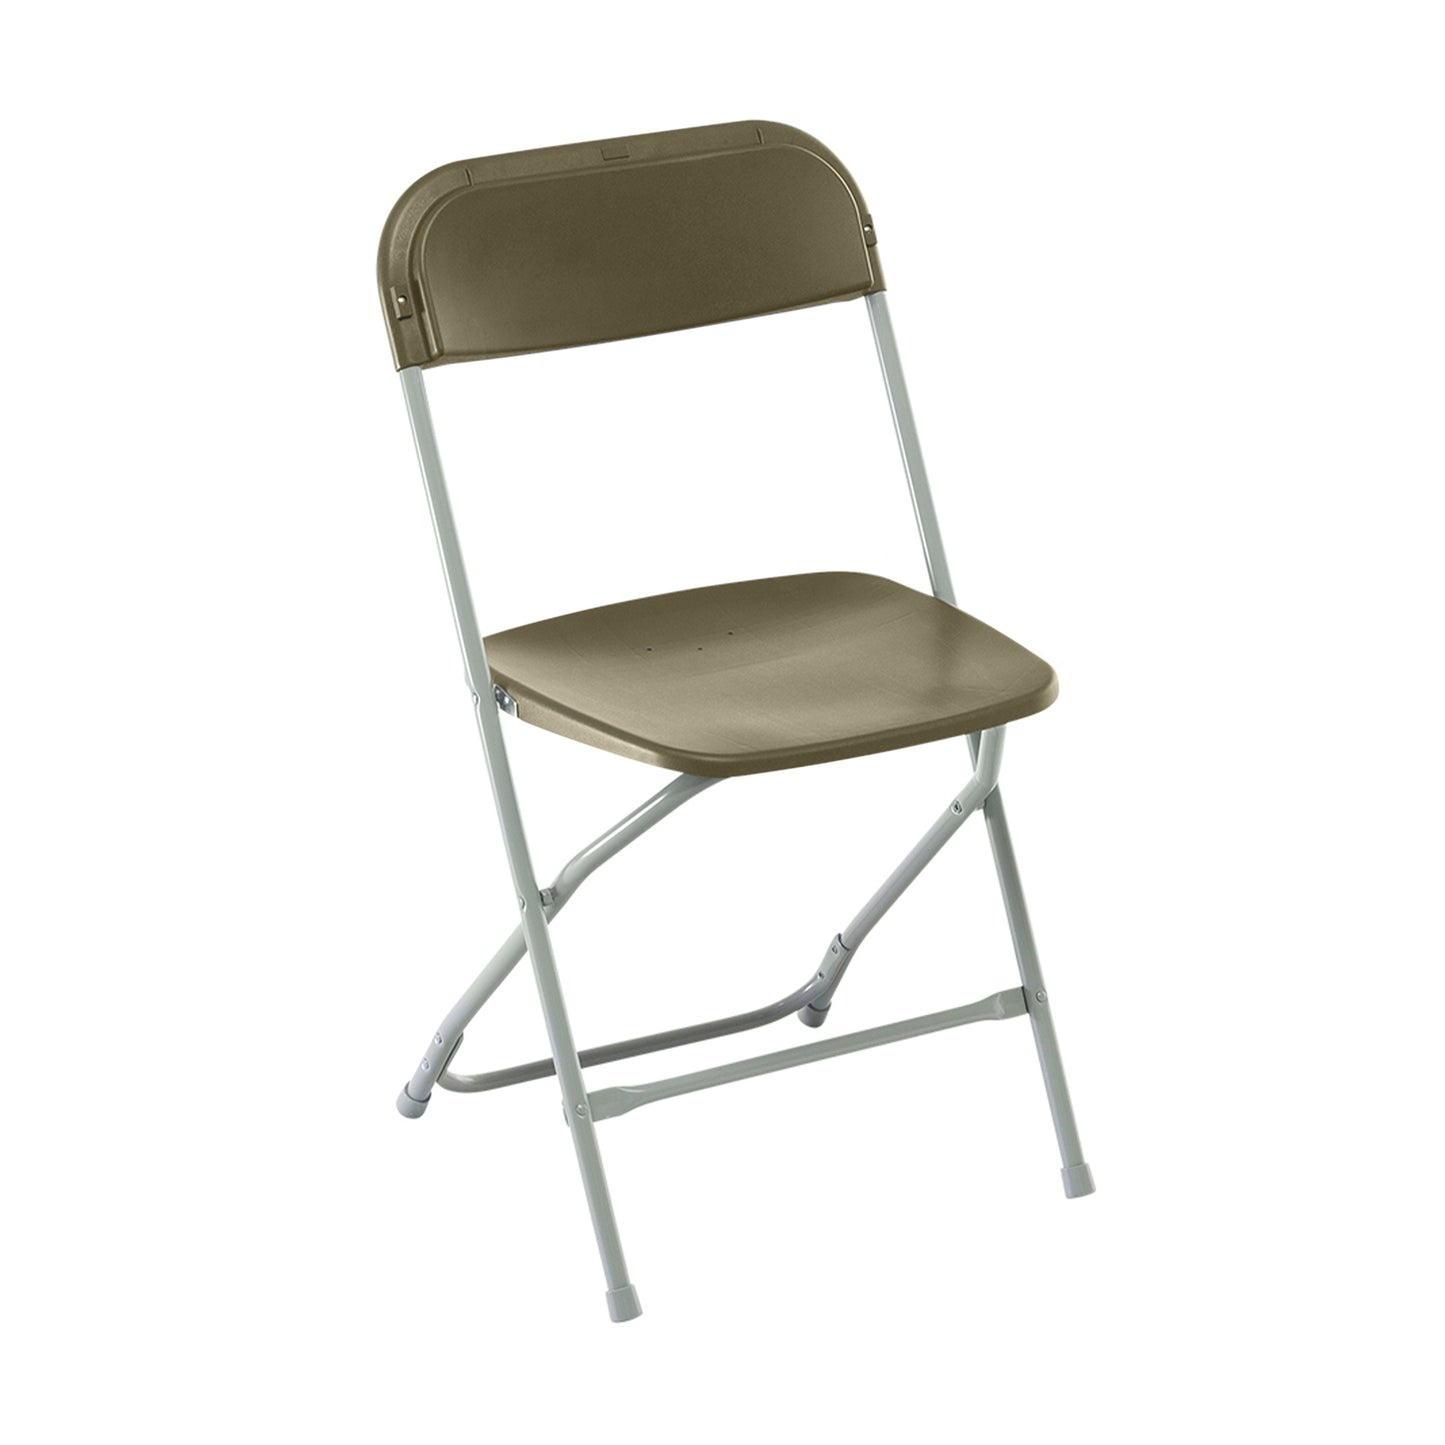 AmTab Folding Chair - 17.5"W x 18"L x 31.5"H - Seat Height 17.75"H  (AMT-FOLDINGCHAIR-1)